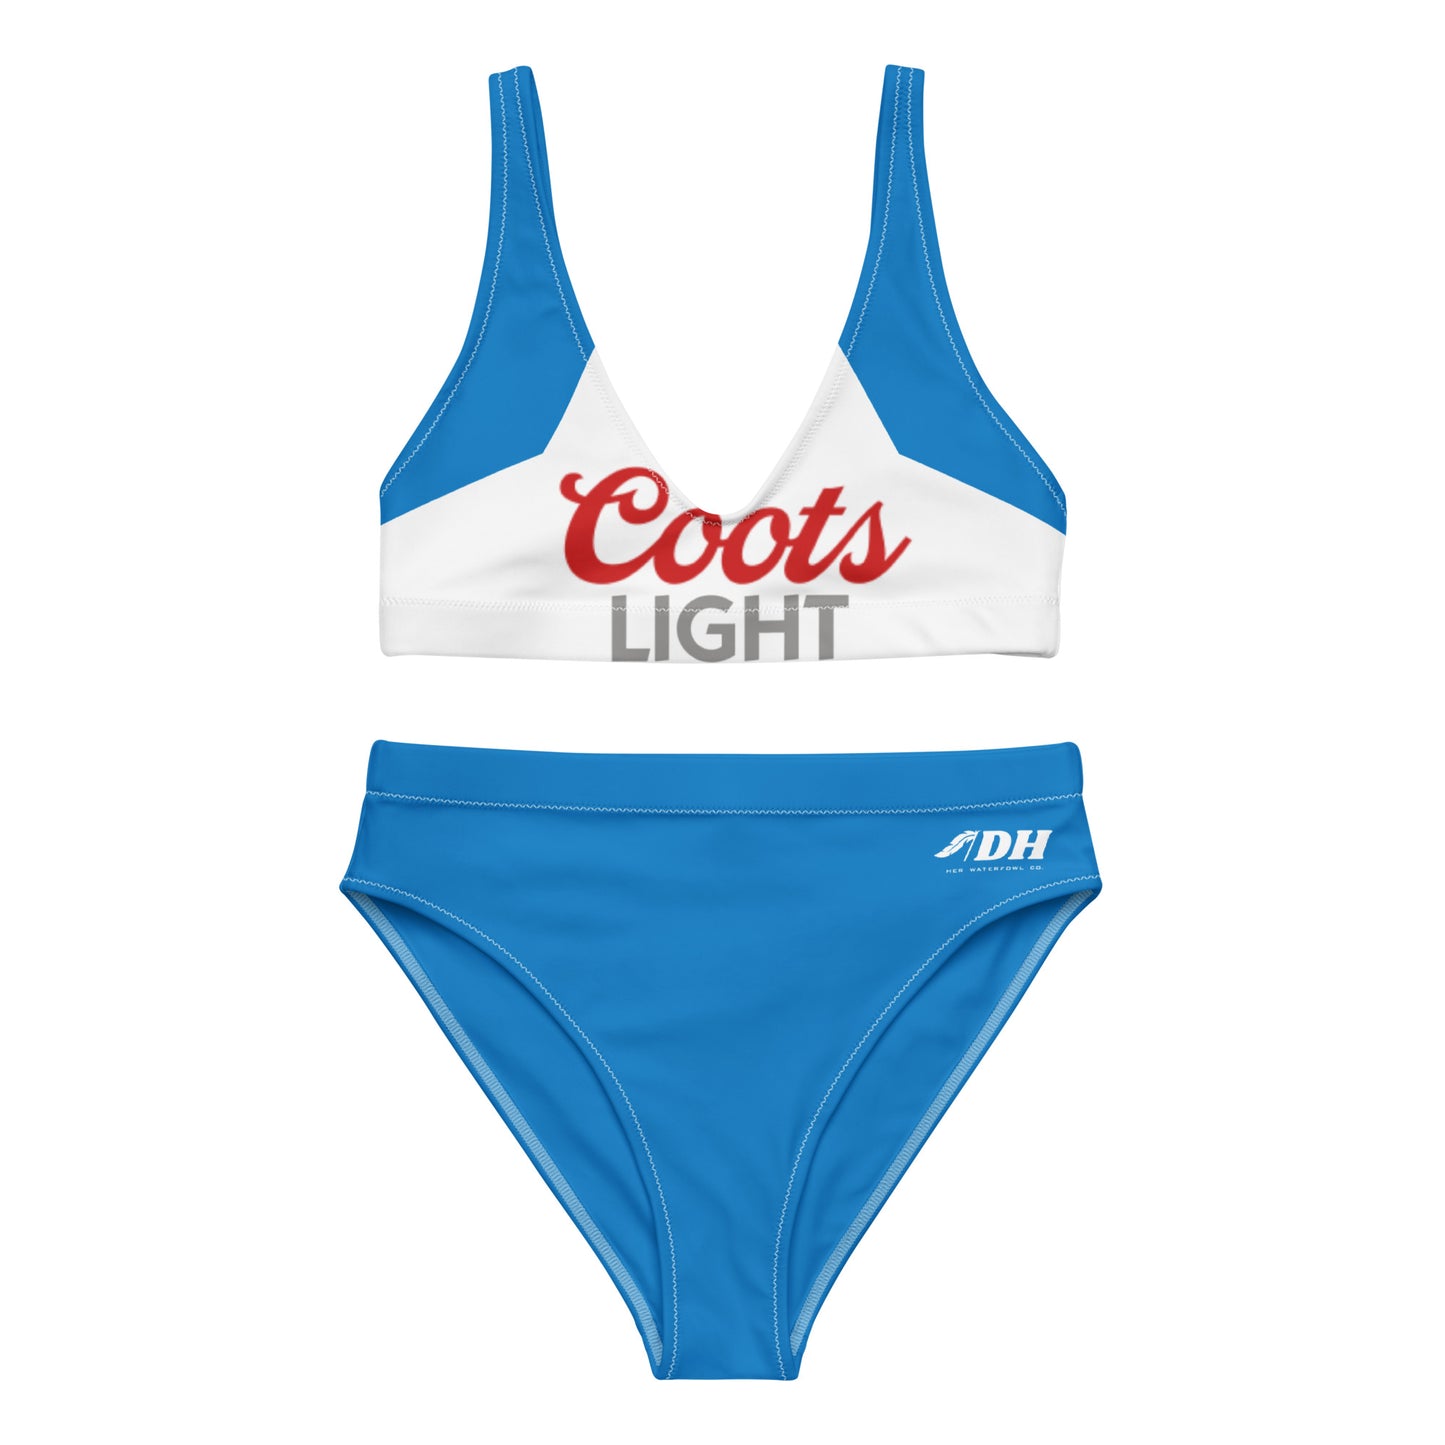 DH Coots LIGHT Bikini Set in Blue